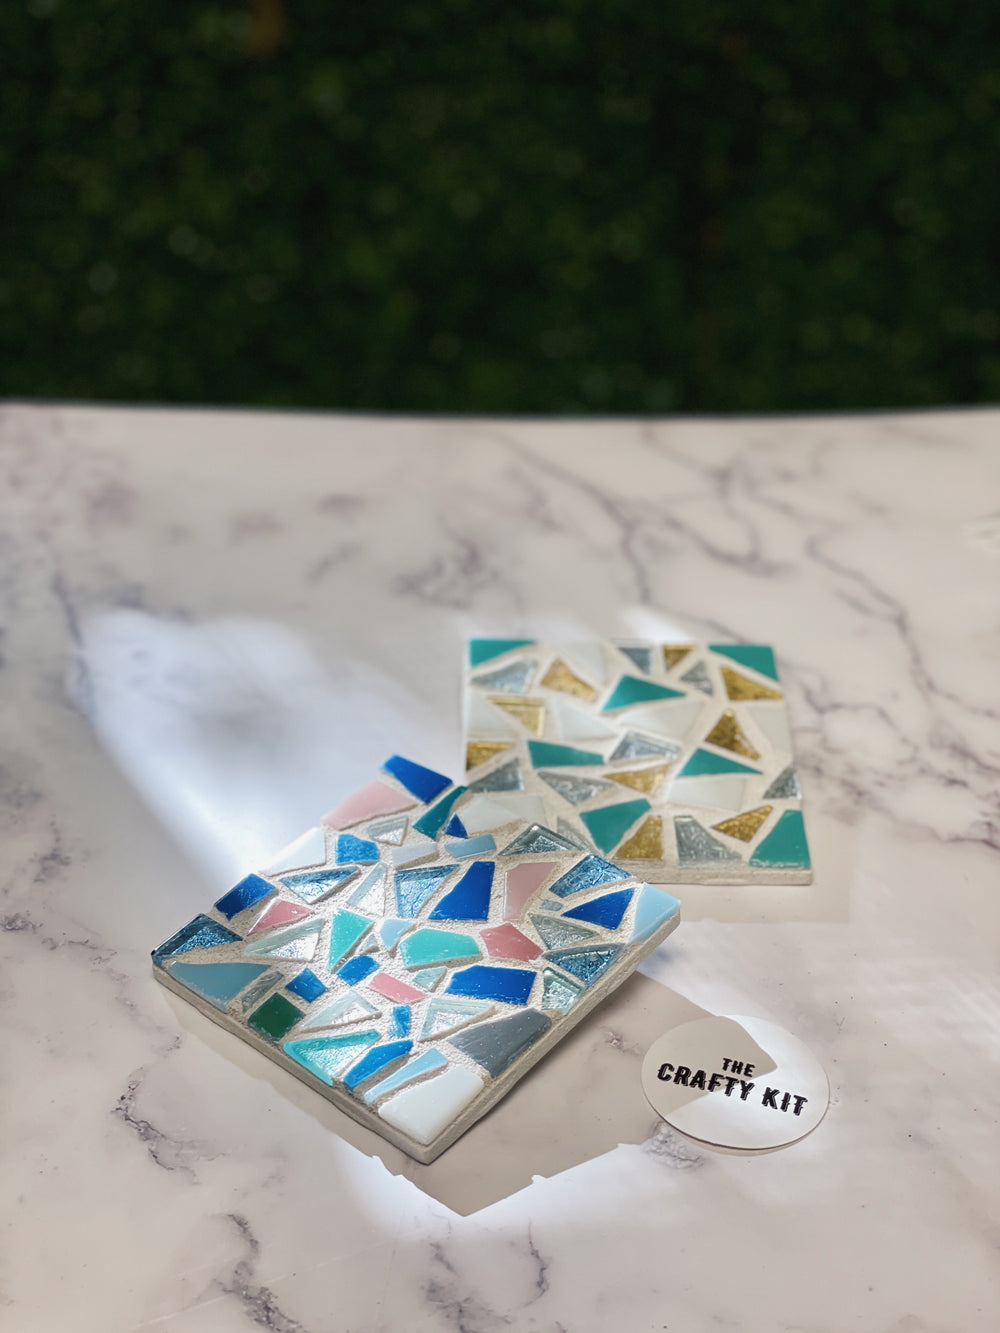 Mosaic Initial Coasters DIY Kit